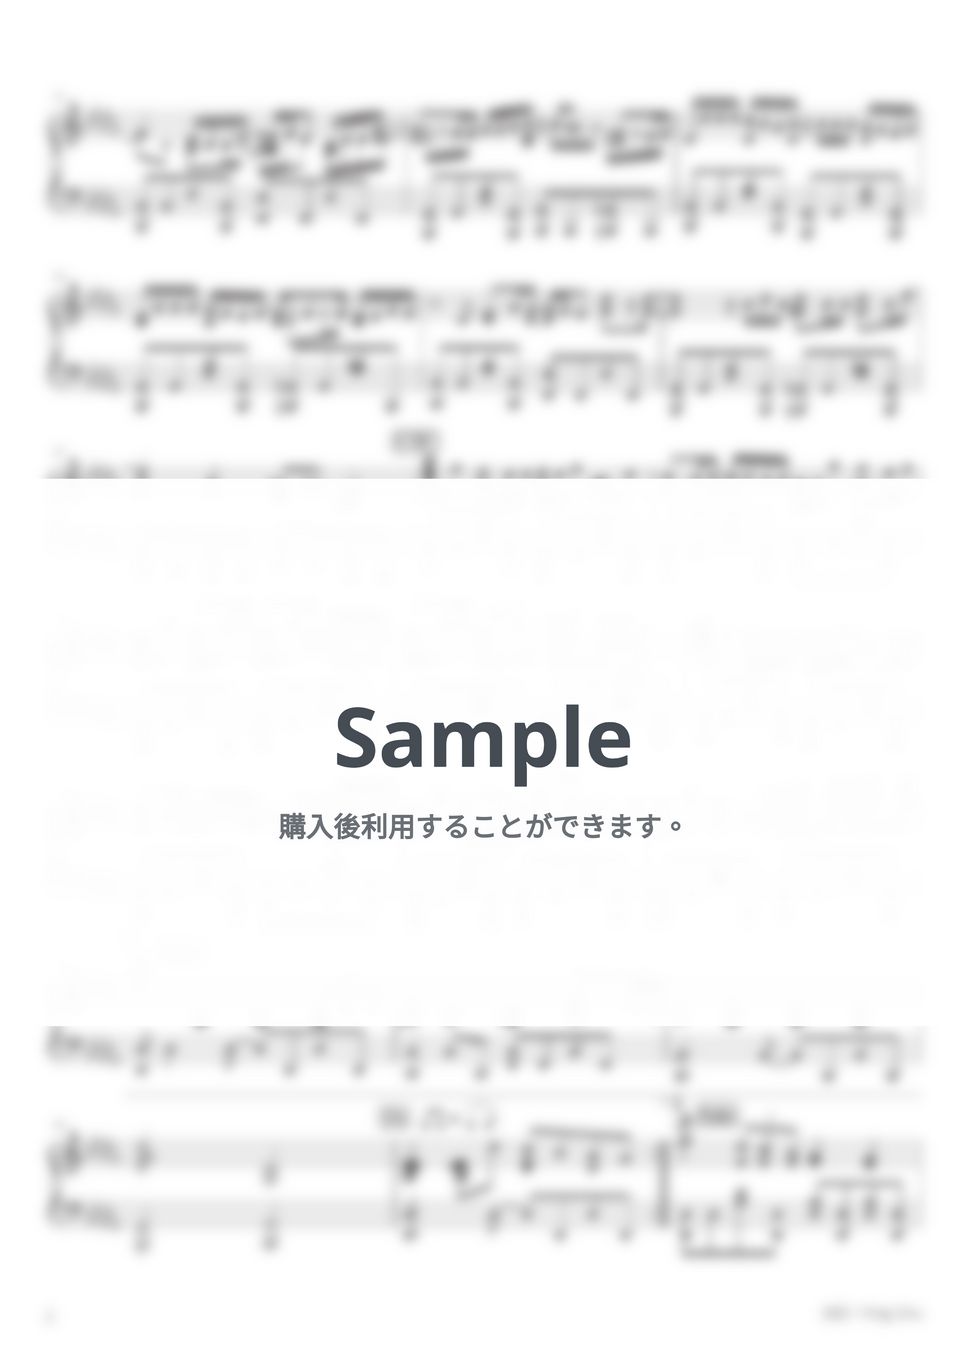 King Gnu - 白日 (PianoSolo) by 深根 / Fukane